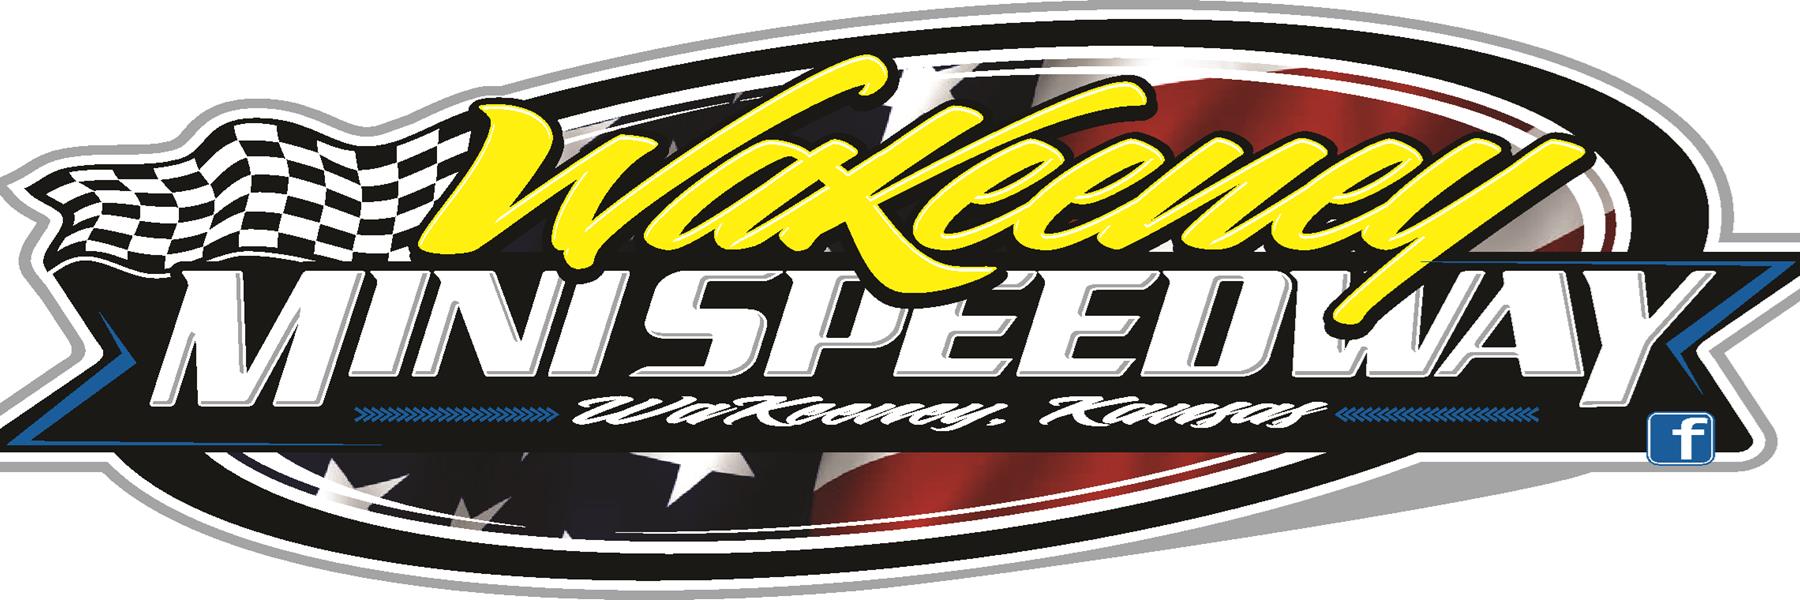 WaKeeney Mini Speedway